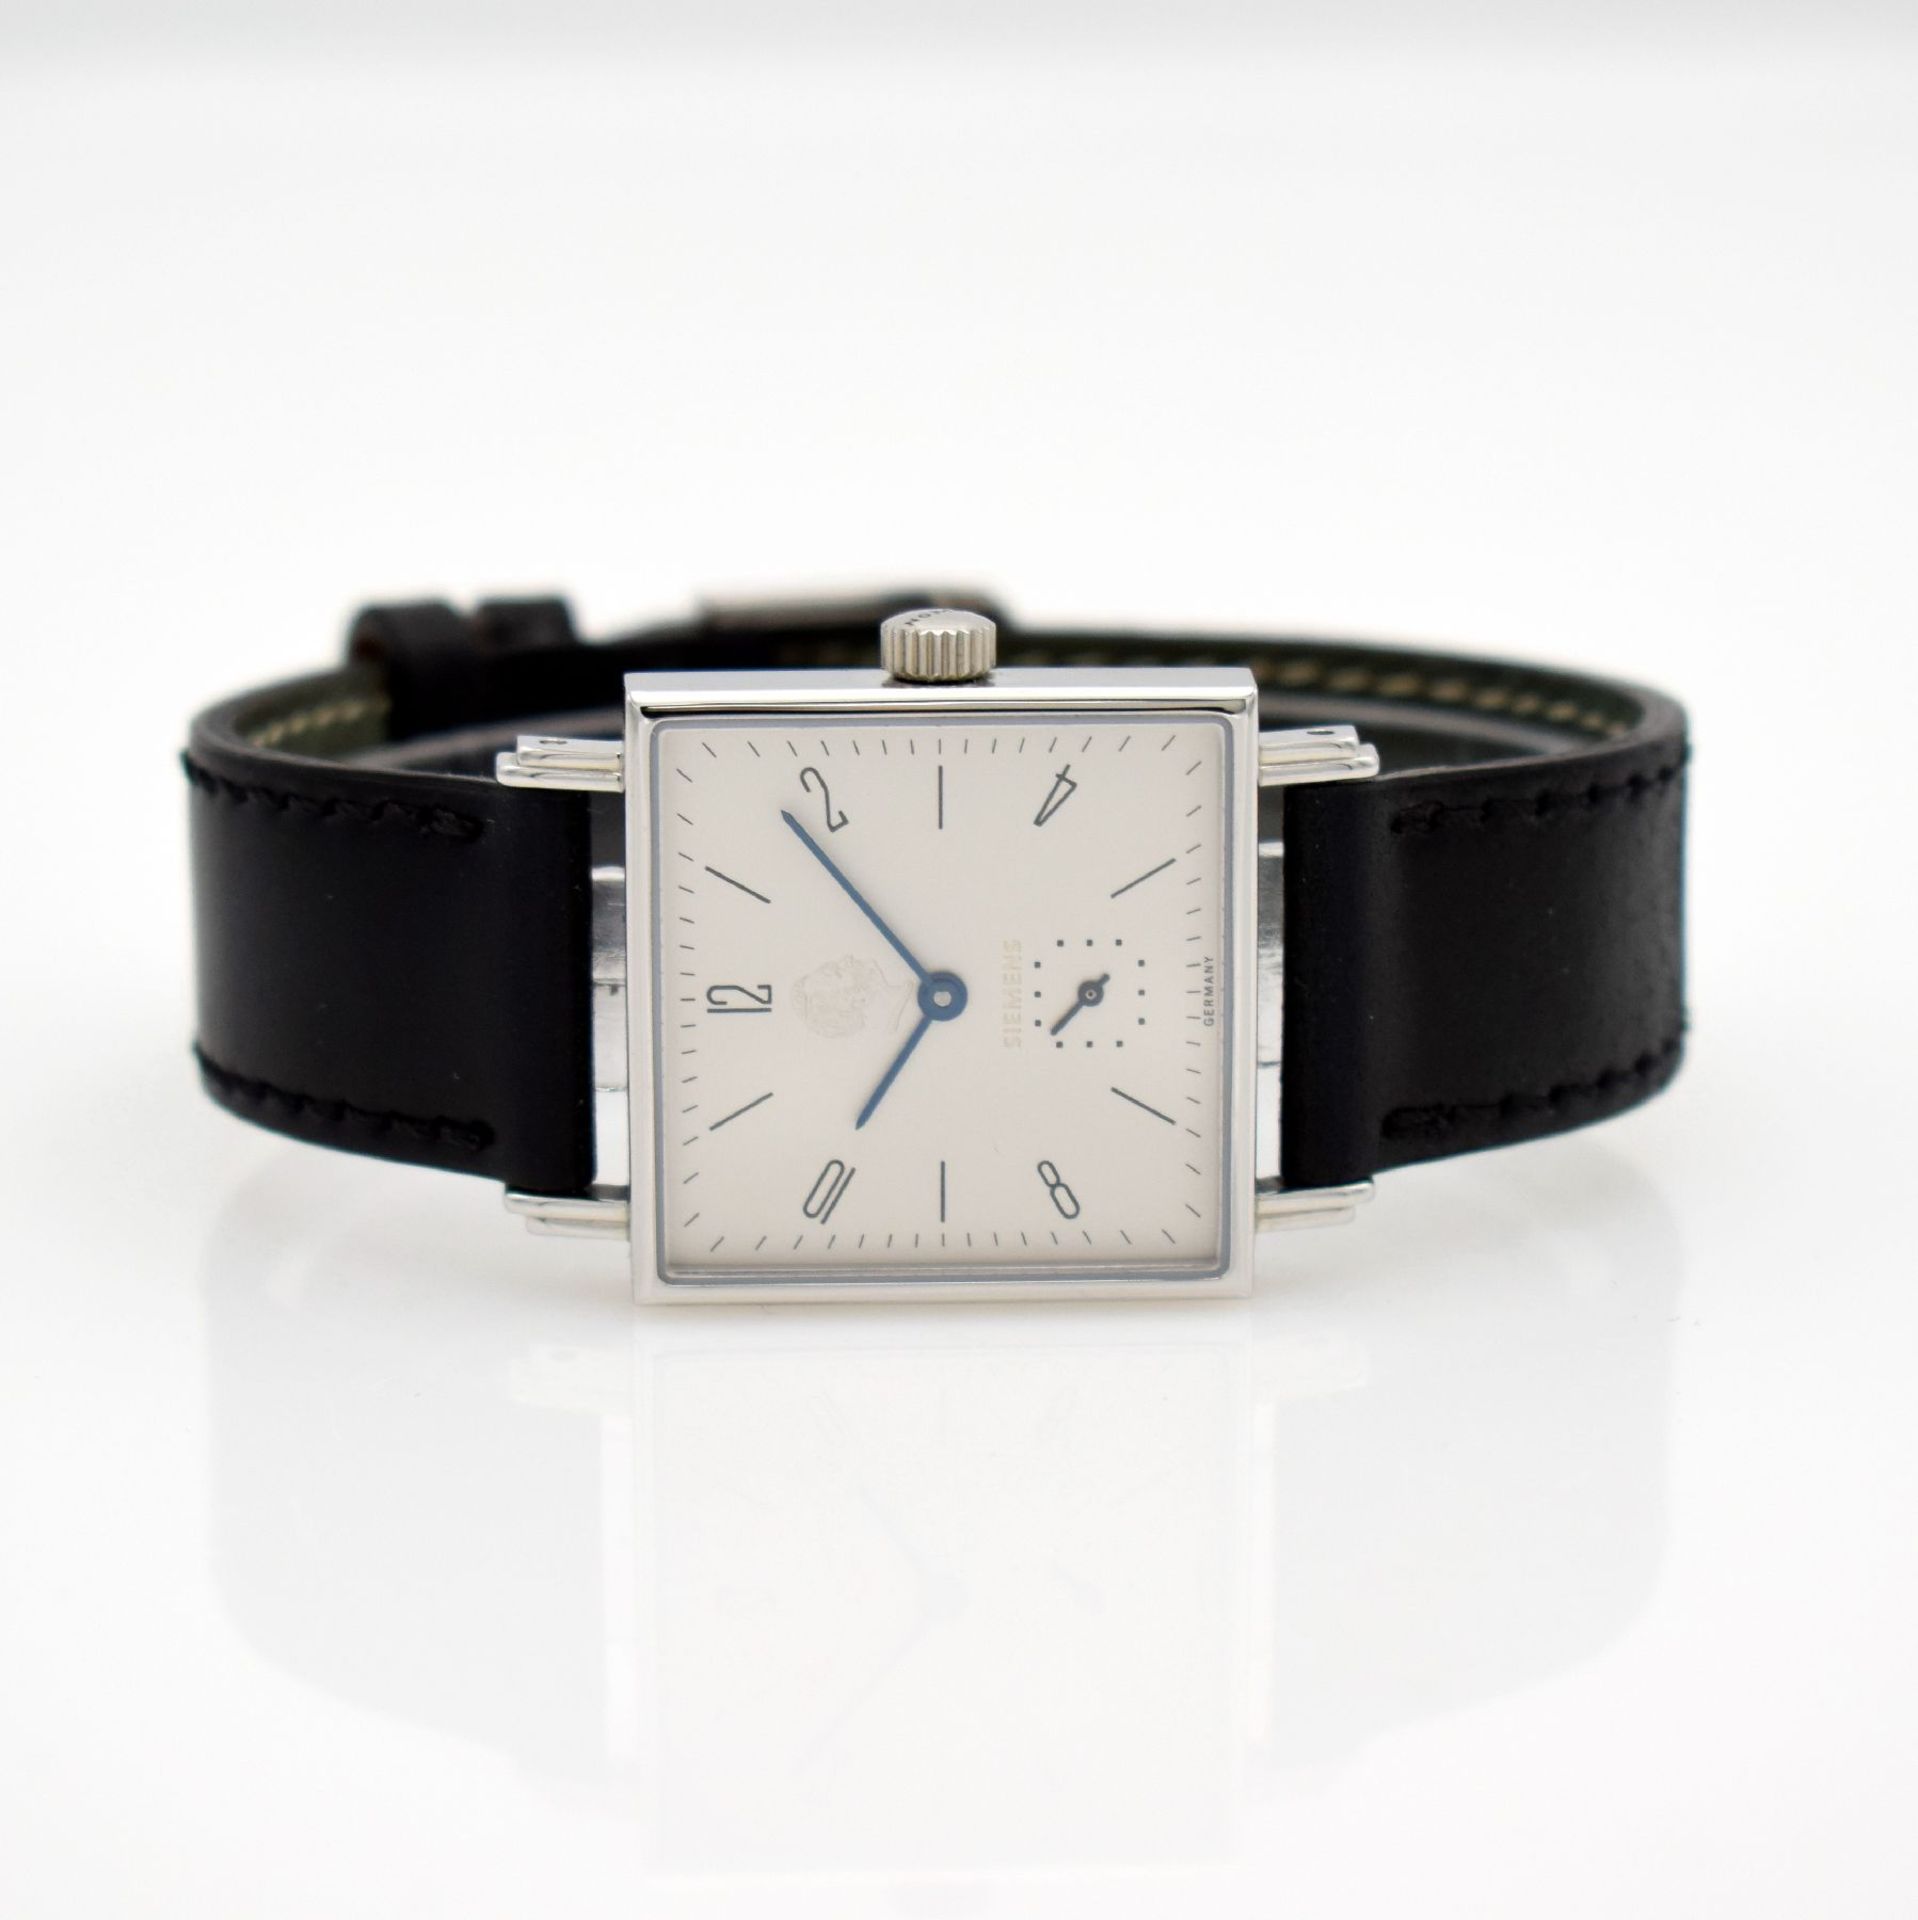 NOMOS Tetra Siemens wristwatch in stainless steel, with dedication engraving, Germany sold in